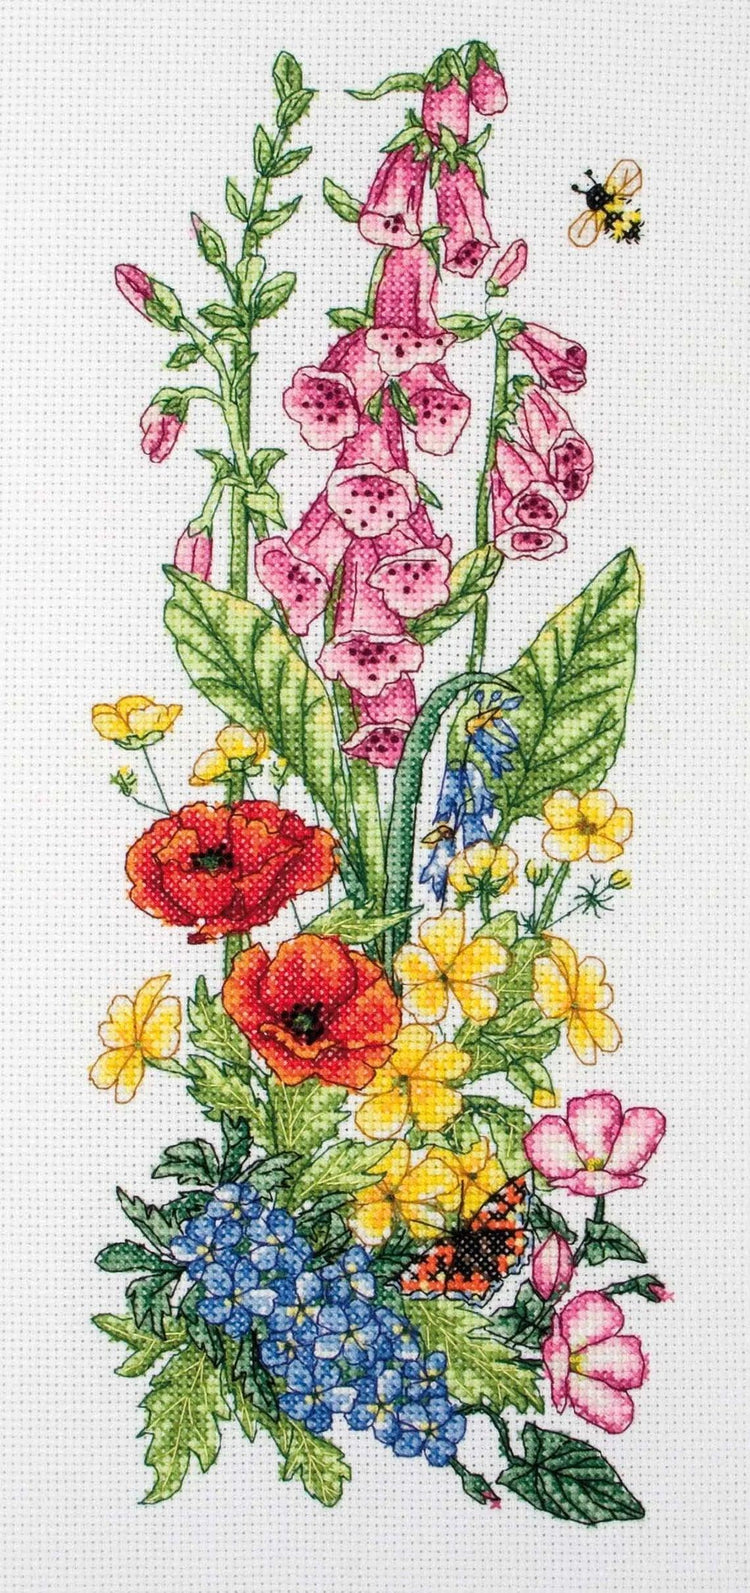 Anchor Cross Stitch Kit - PCE971, Cottage Garden Floral - Luca-S Cross Stitch Kits